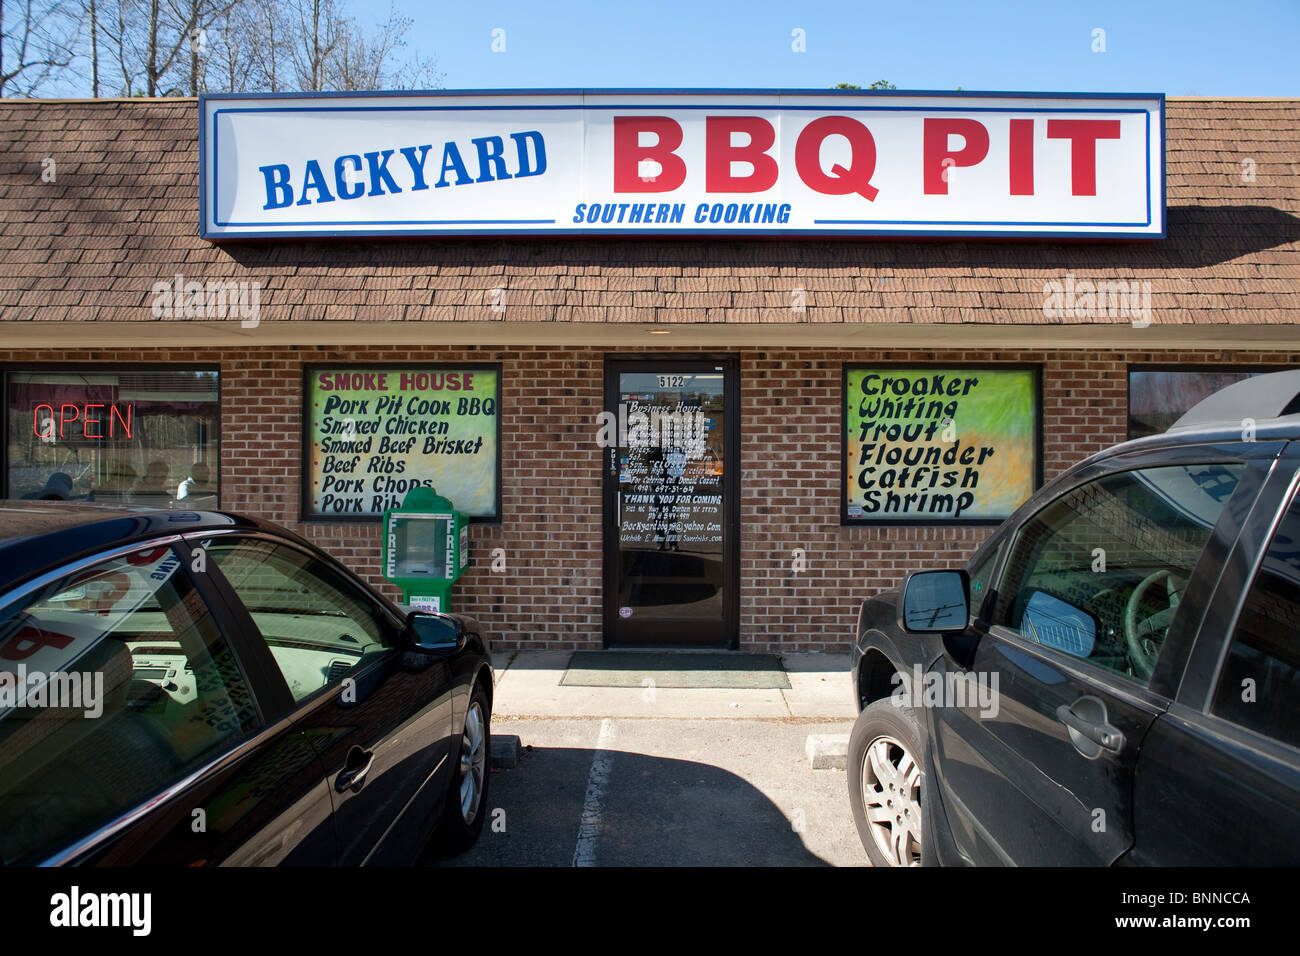 Backyard BBQ Pit restaurant. Southern style BBQ. Stock Photo